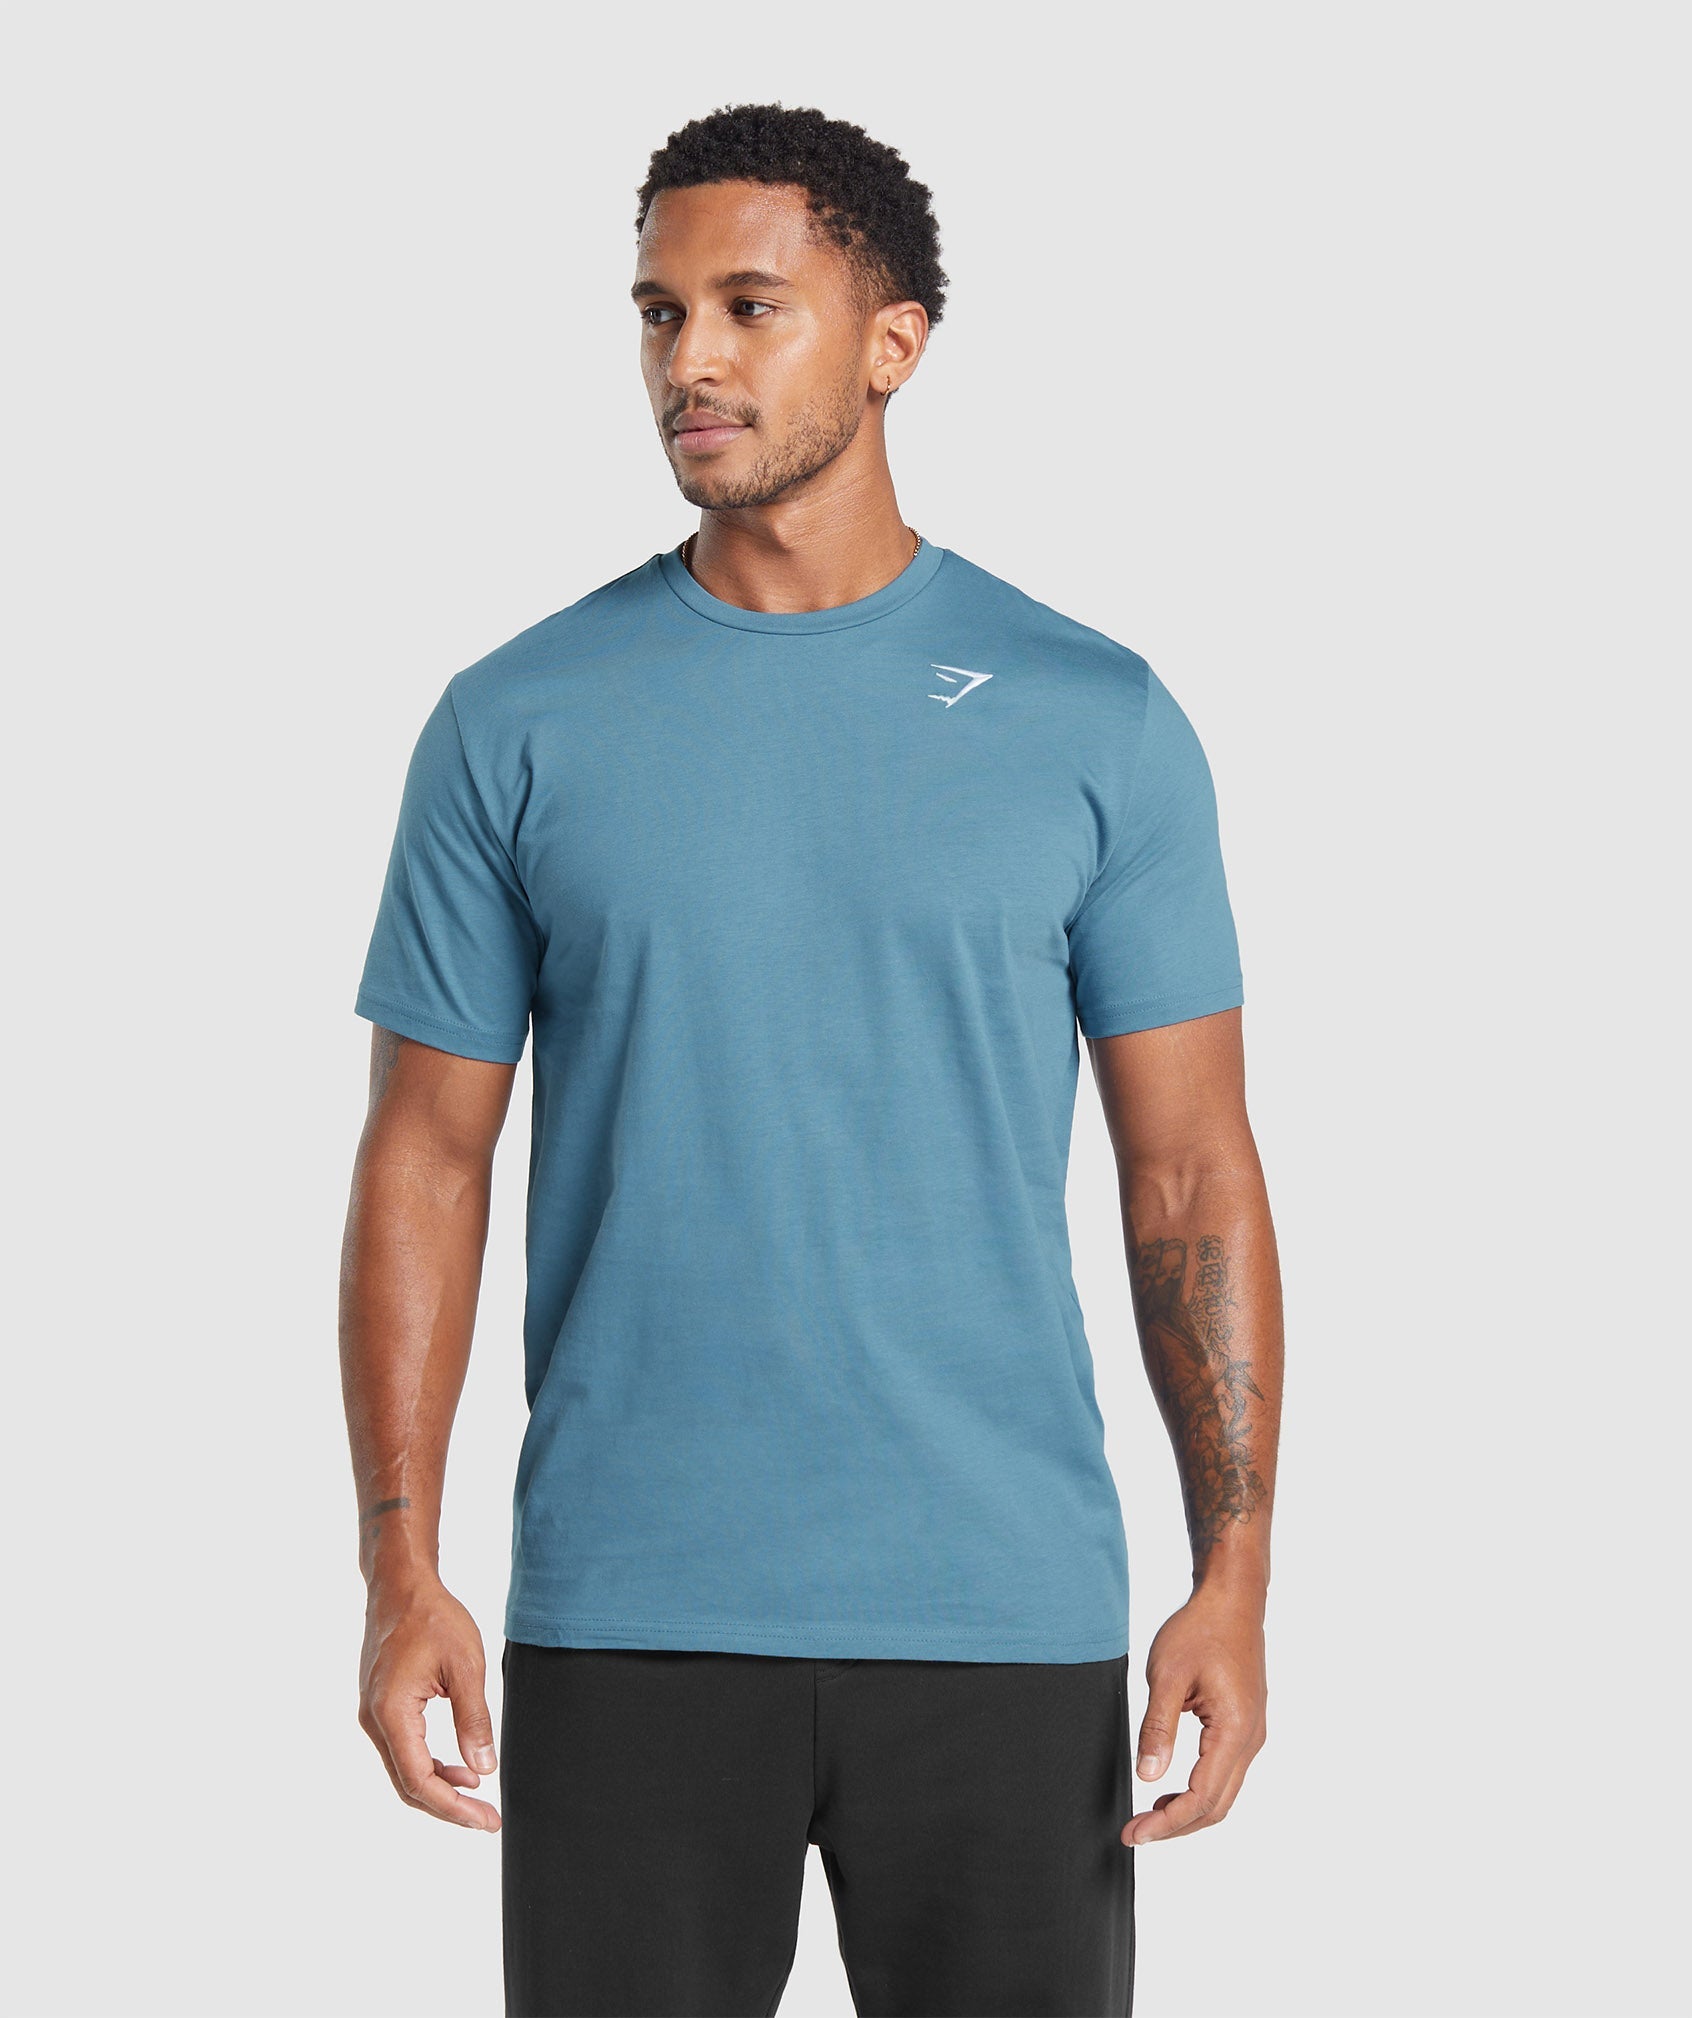 Gymshark Crest T-Shirt - Faded Blue